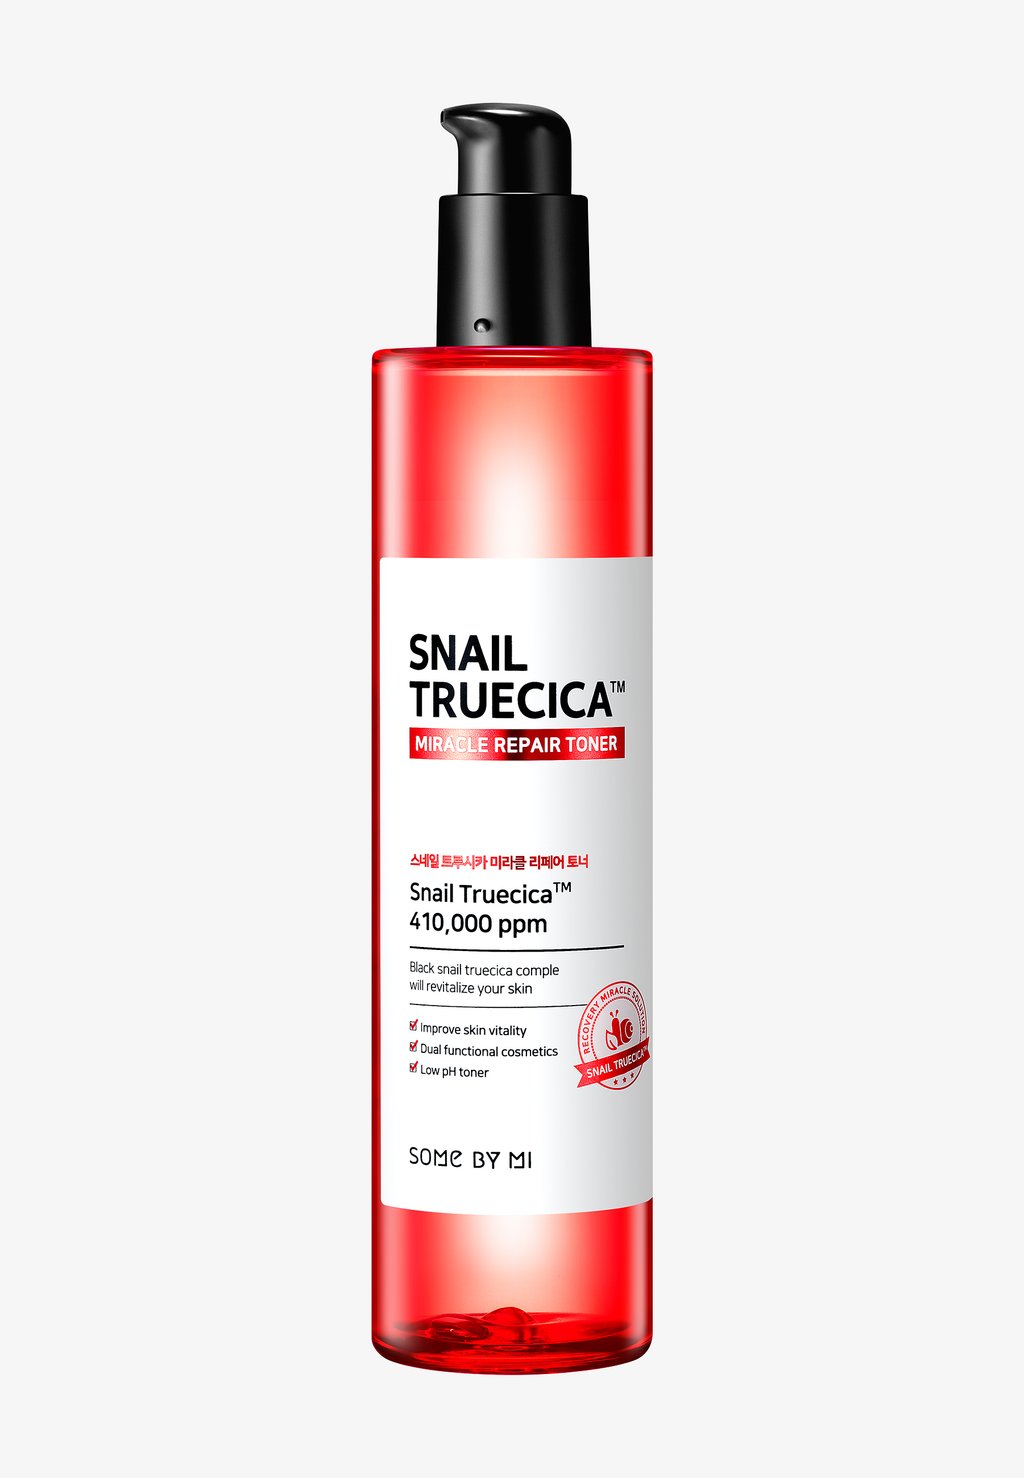 some by mi snail trucica miracle repair toner 135 ml Ночные процедуры Snail Truecica Miracle Repair Toner SOME BY MI